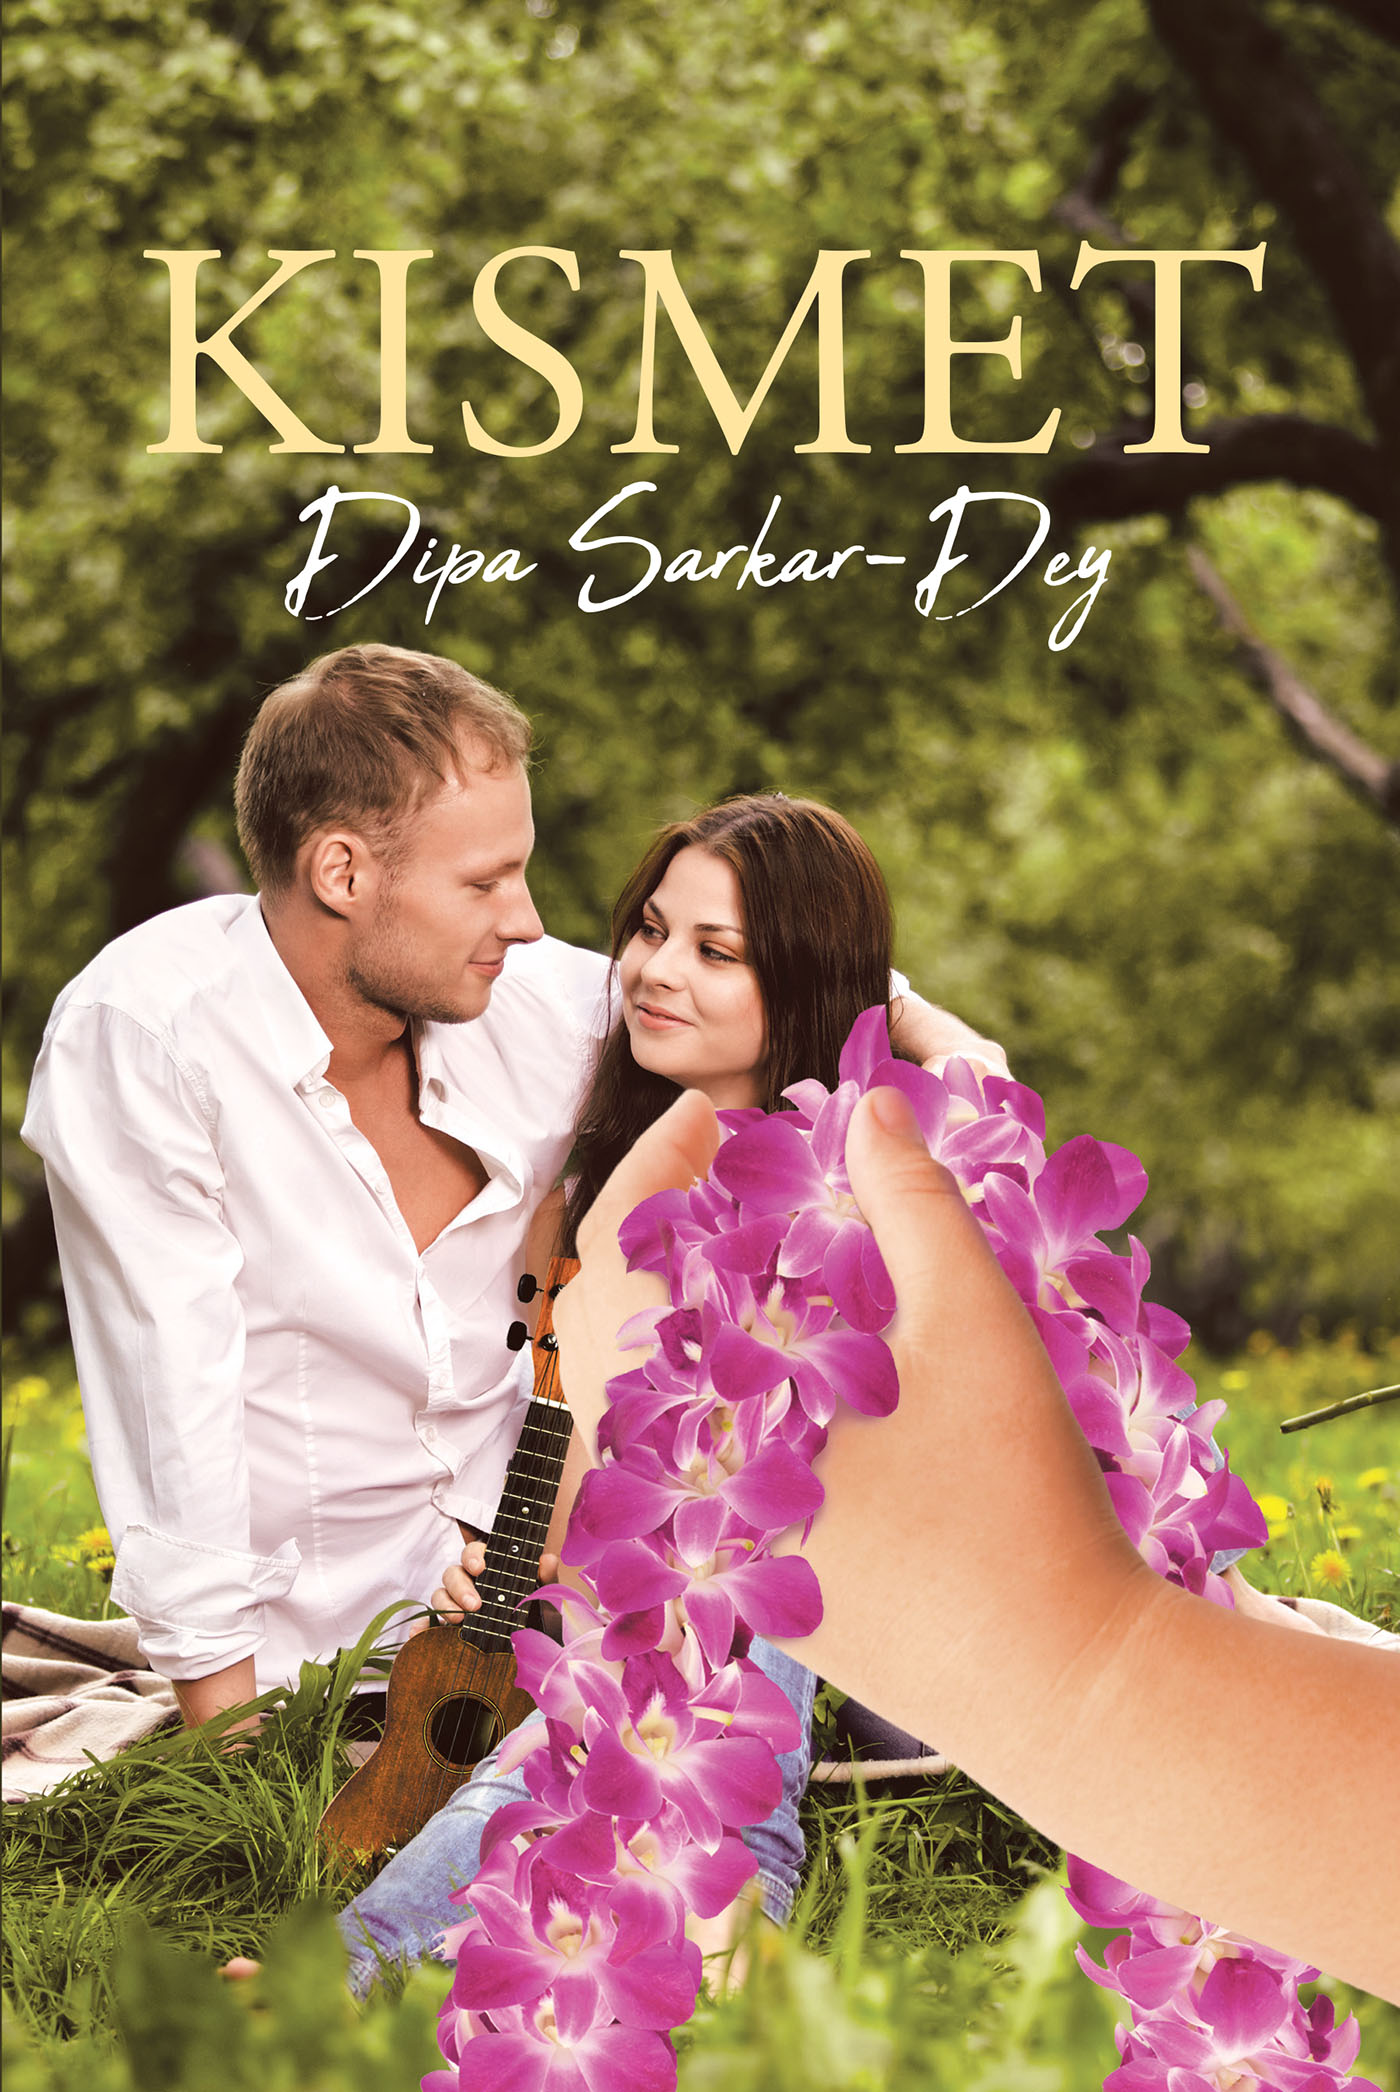 Kismet Cover Image